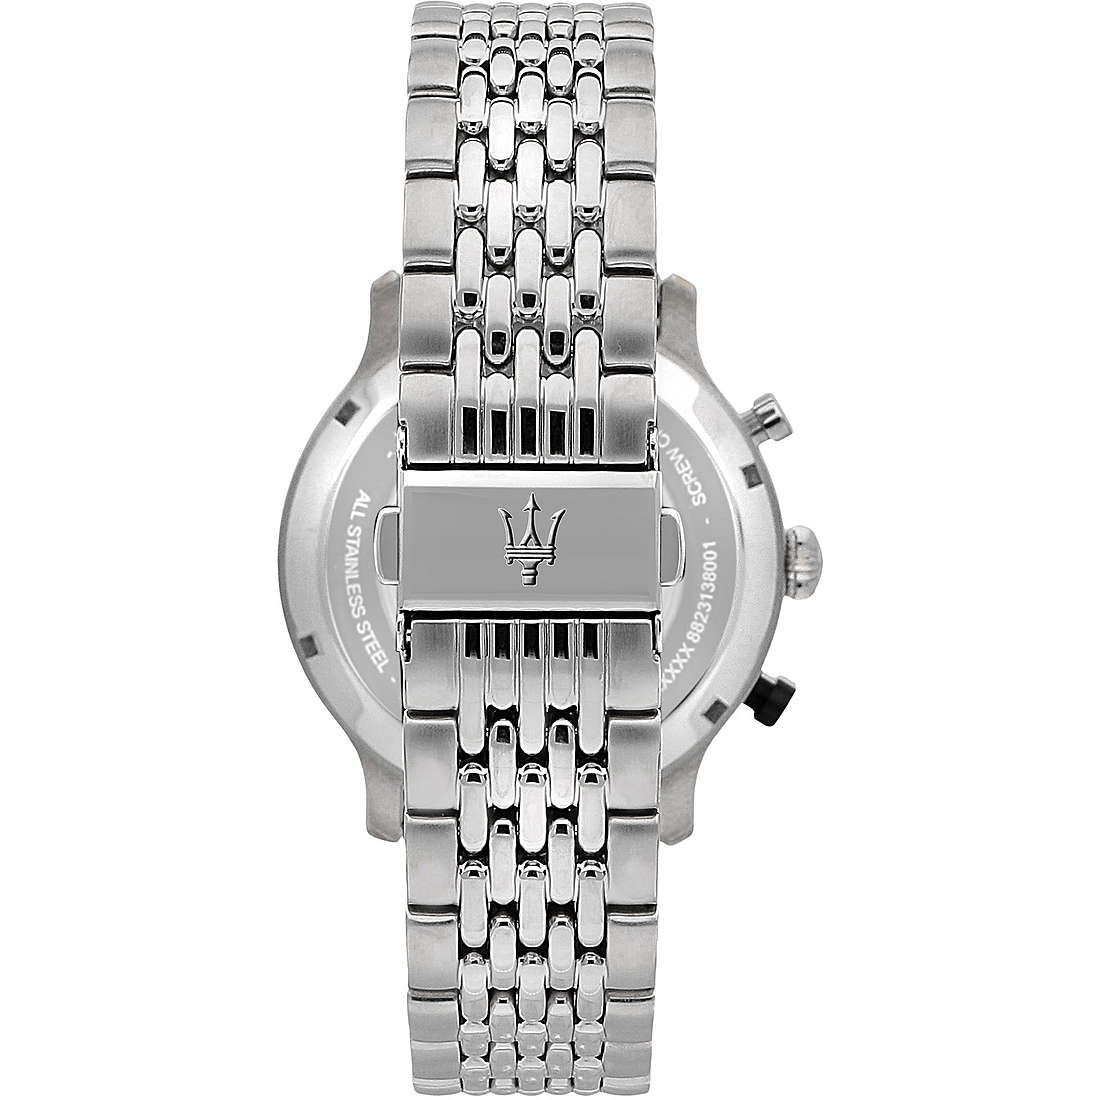 montre chronographe homme Maserati Legend R8873638001